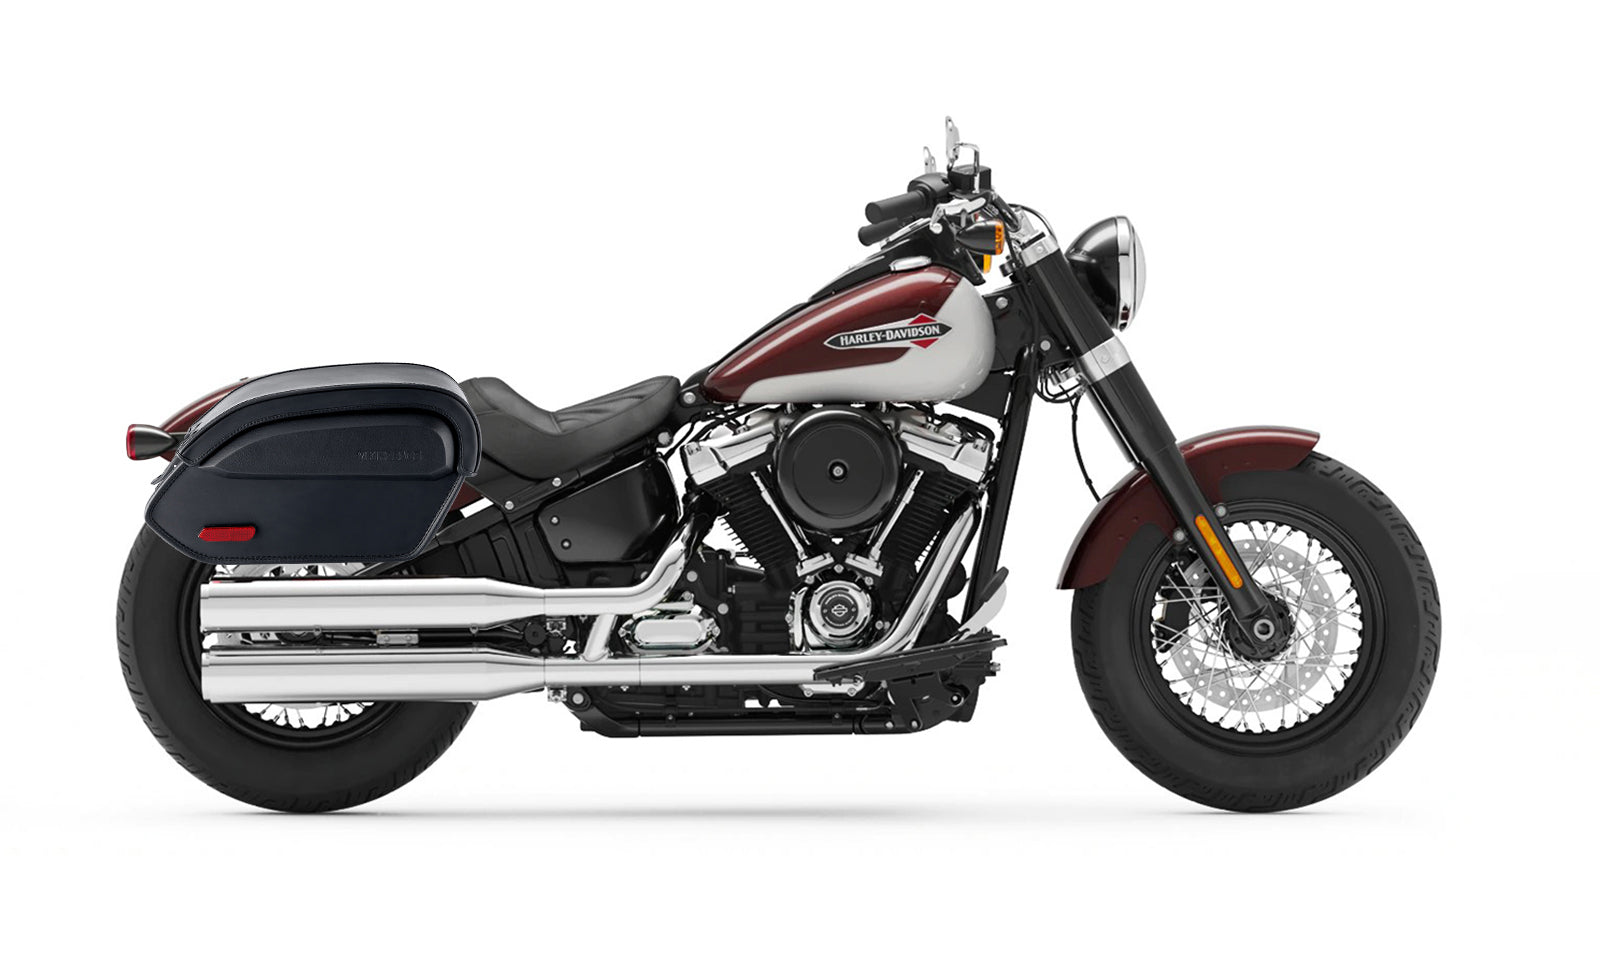 24L - Aviator Large Leather Saddlebags for Harley Softail Slim FLSL on Bike Photo @expand